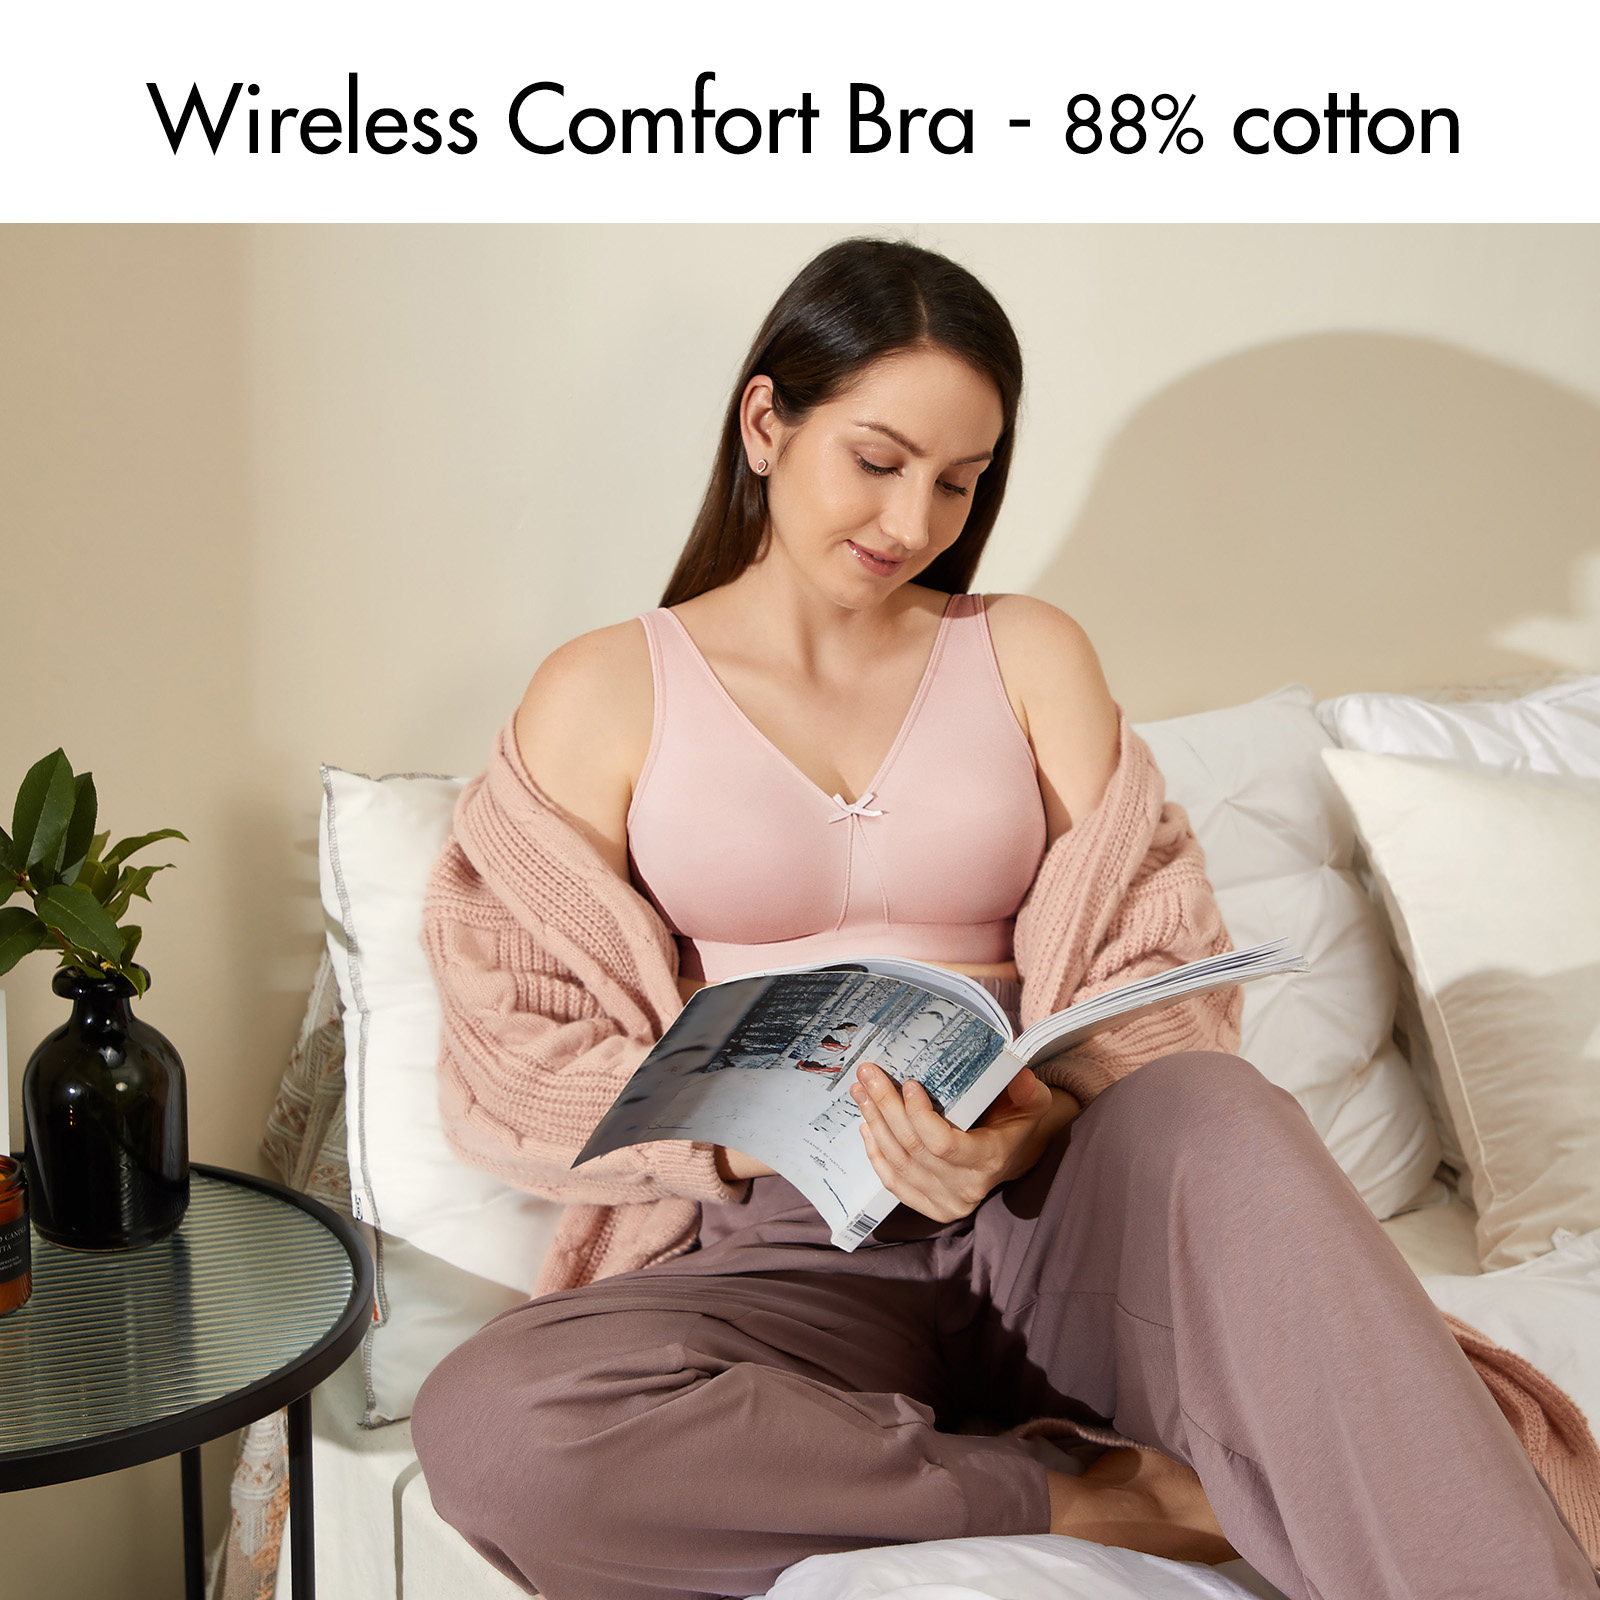 AISILIN Women's Wireless Plus Size Bra Cotton Support Comfort - Import It  All